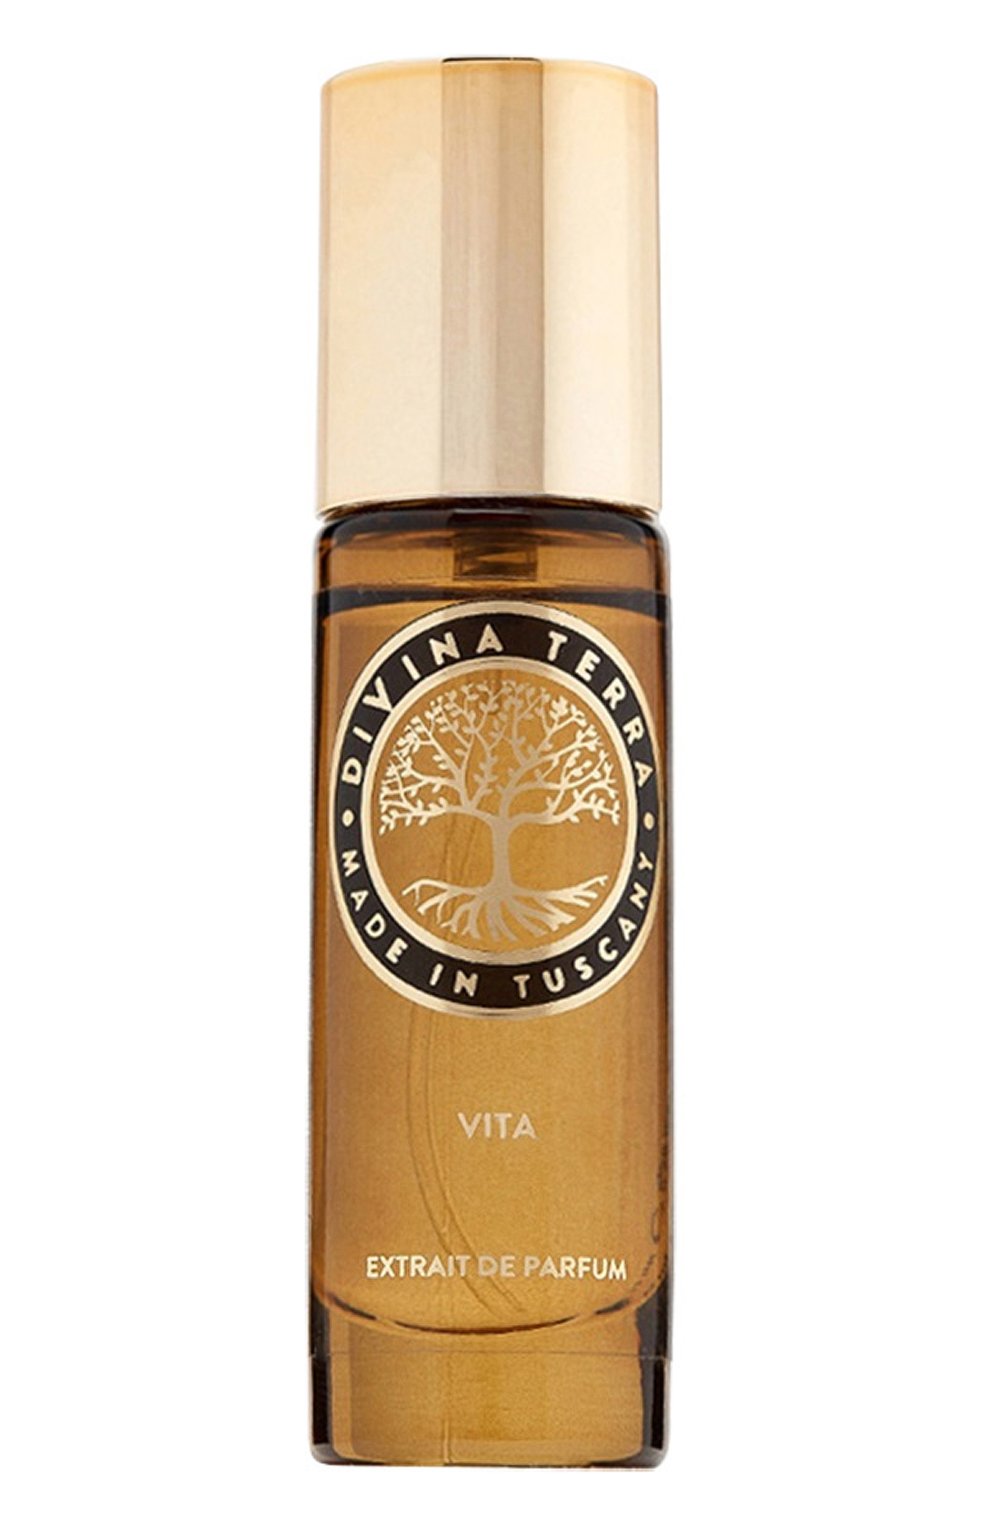 Divina terra vita extrait de parfum battery for lenovo thinkpad w540